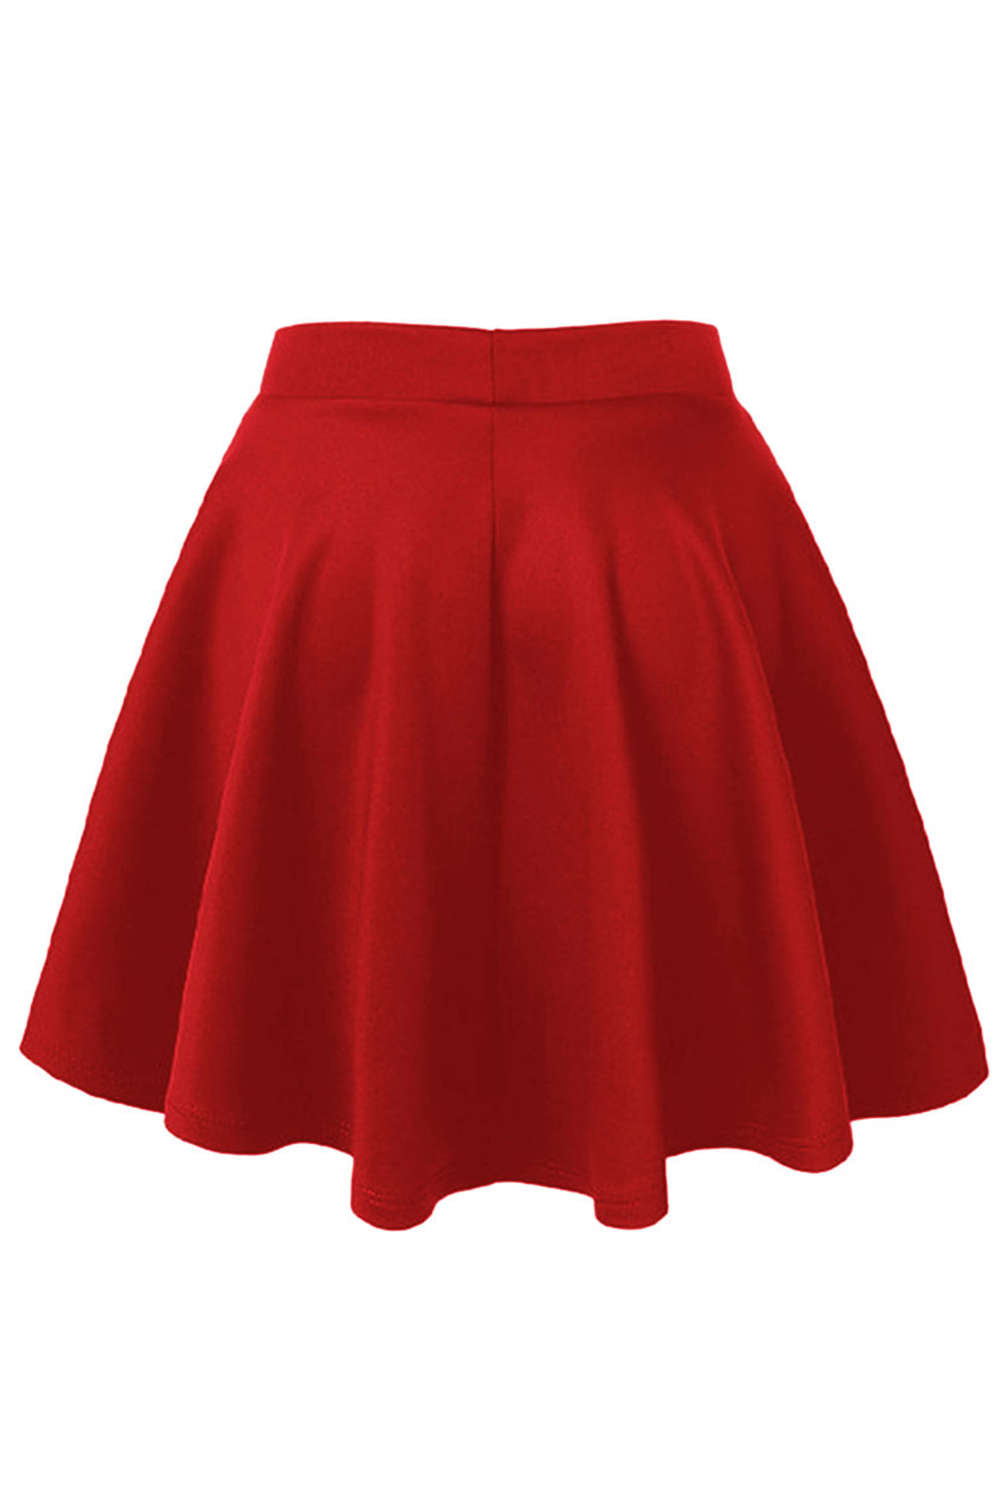 Iyasson Women Flared A-Line Skirt